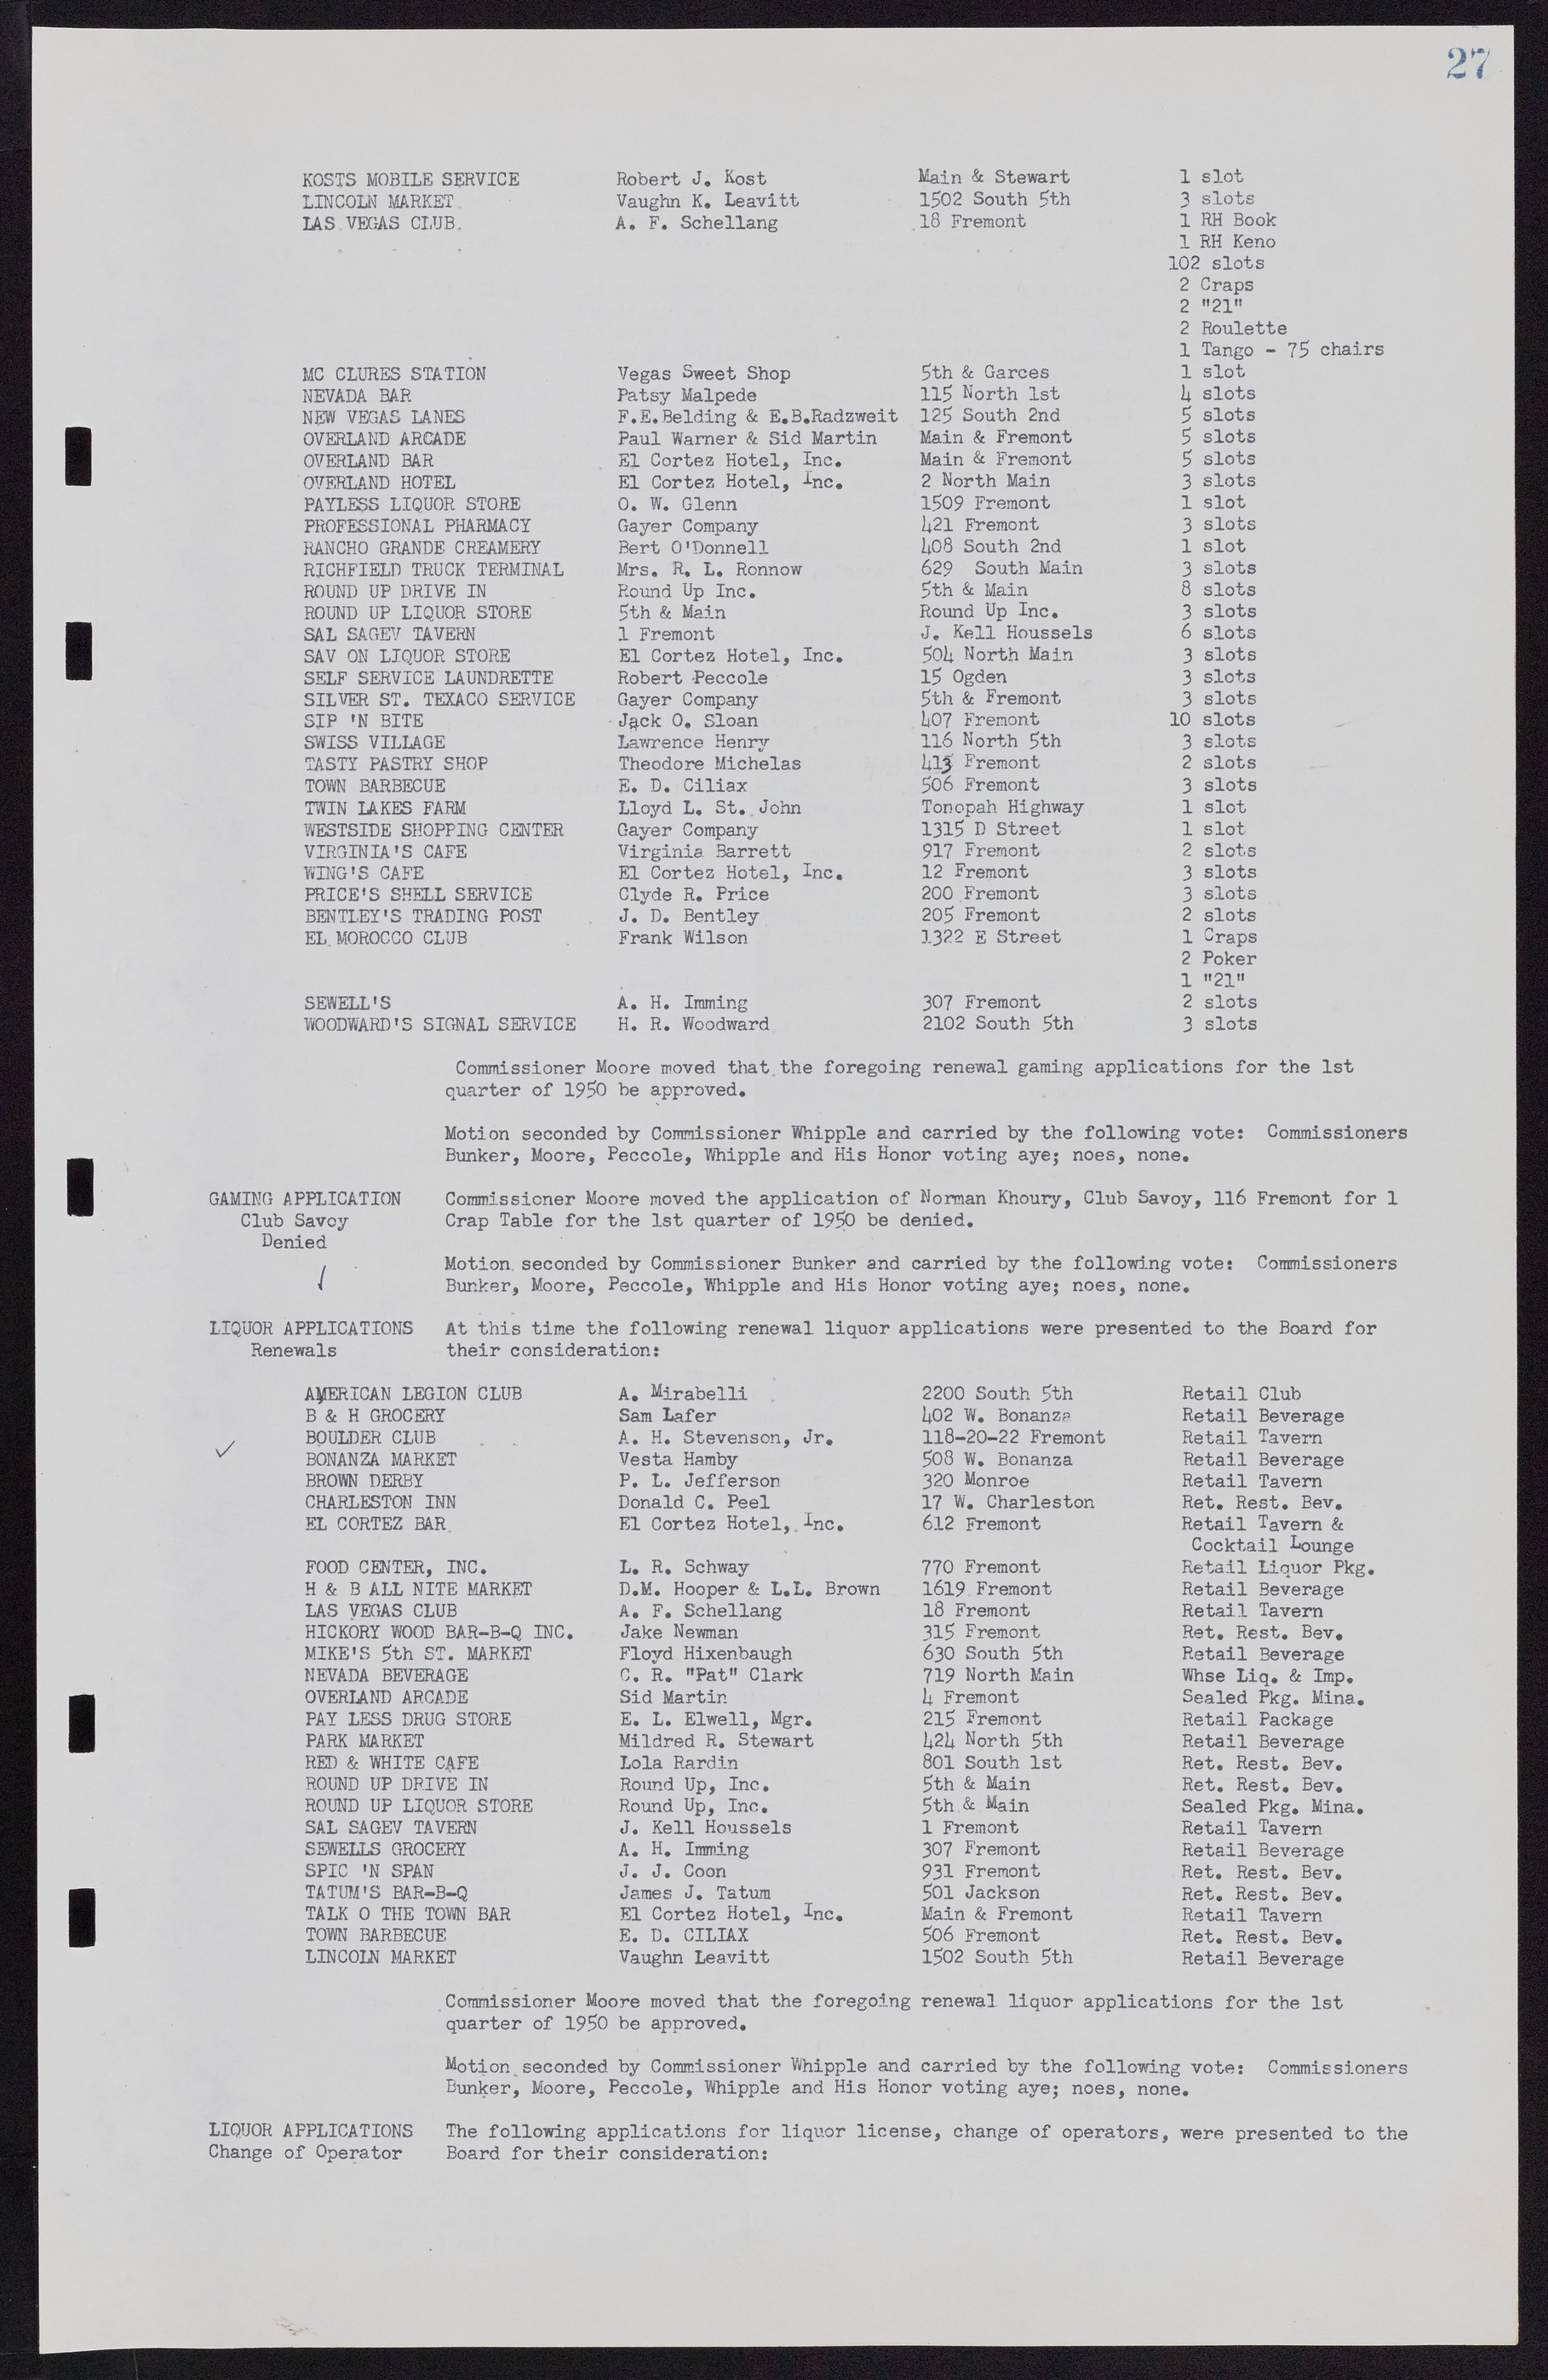 Las Vegas City Commission Minutes, November 7, 1949 to May 21, 1952, lvc000007-35